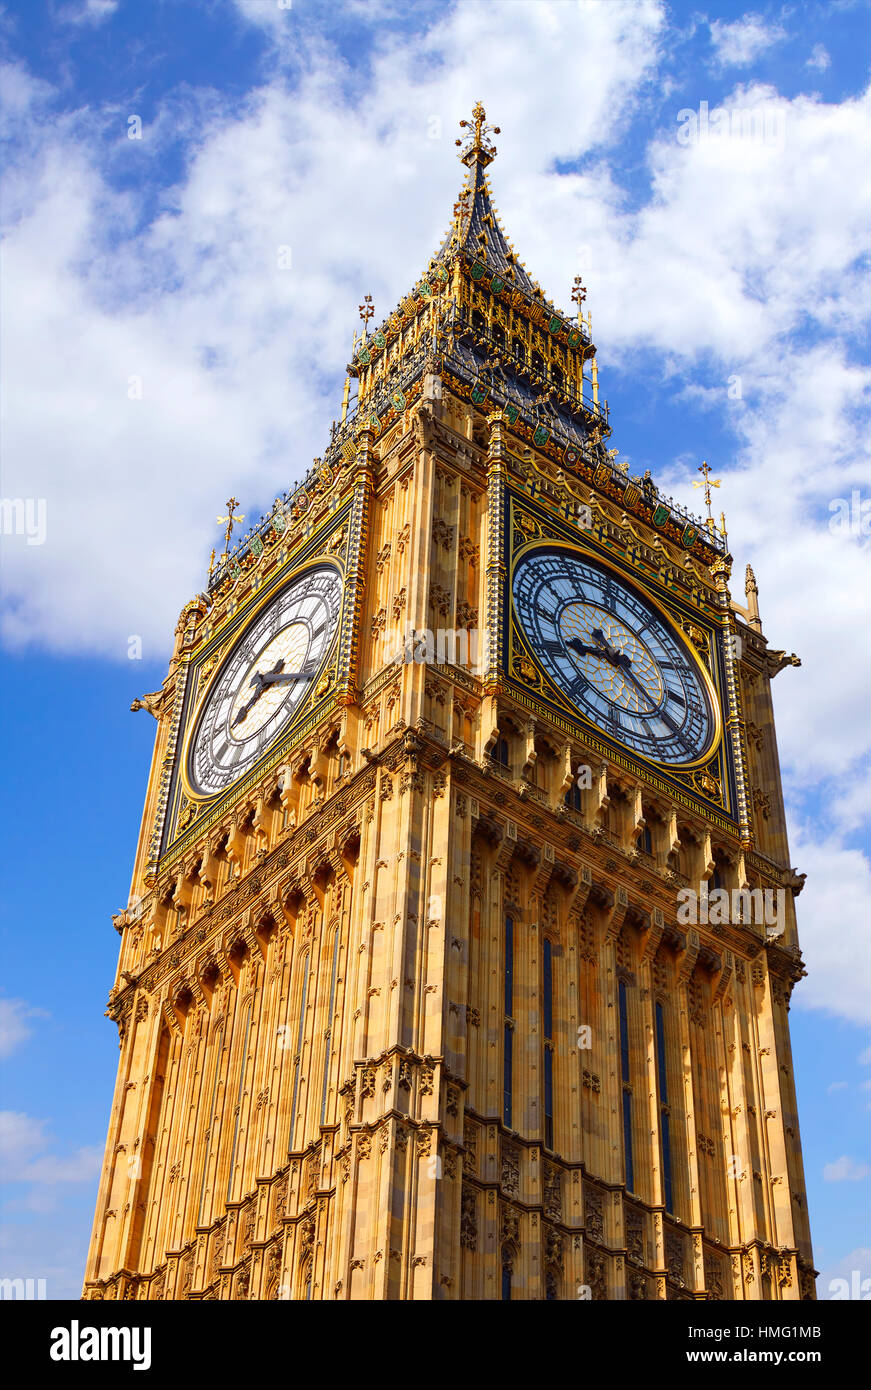 Big Ben Clock Tower in London at England Stock Photo